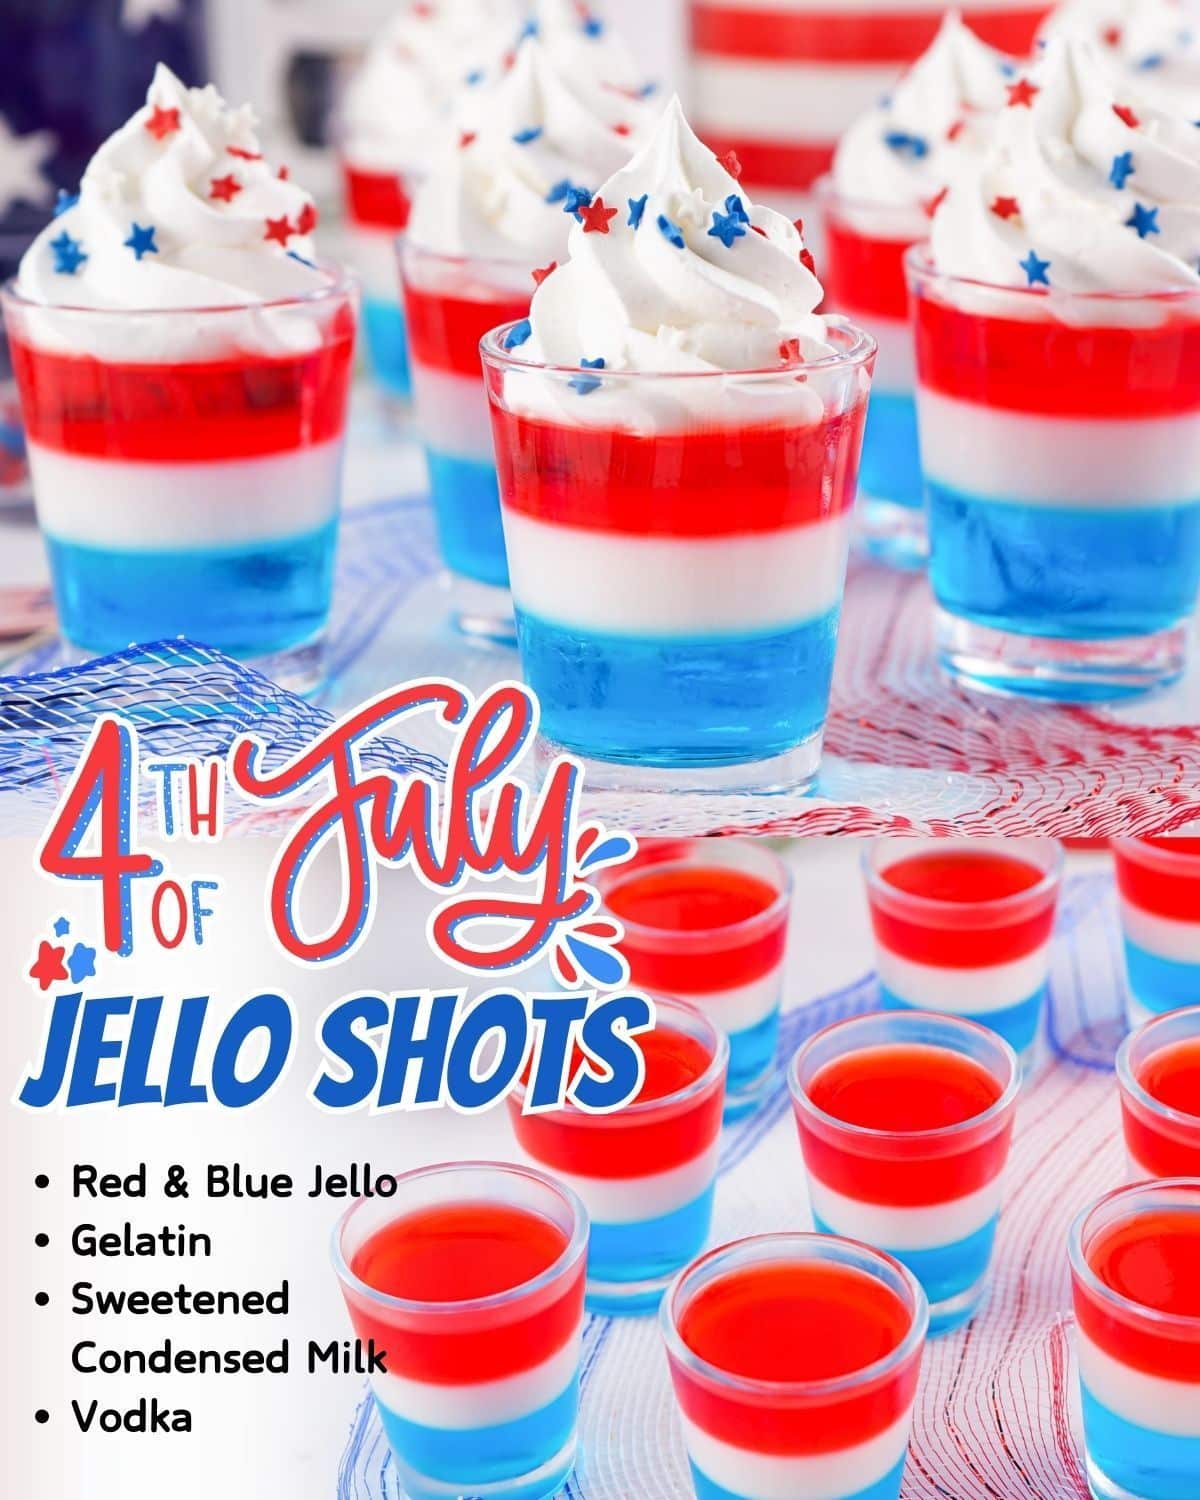 4th of july jello shots.